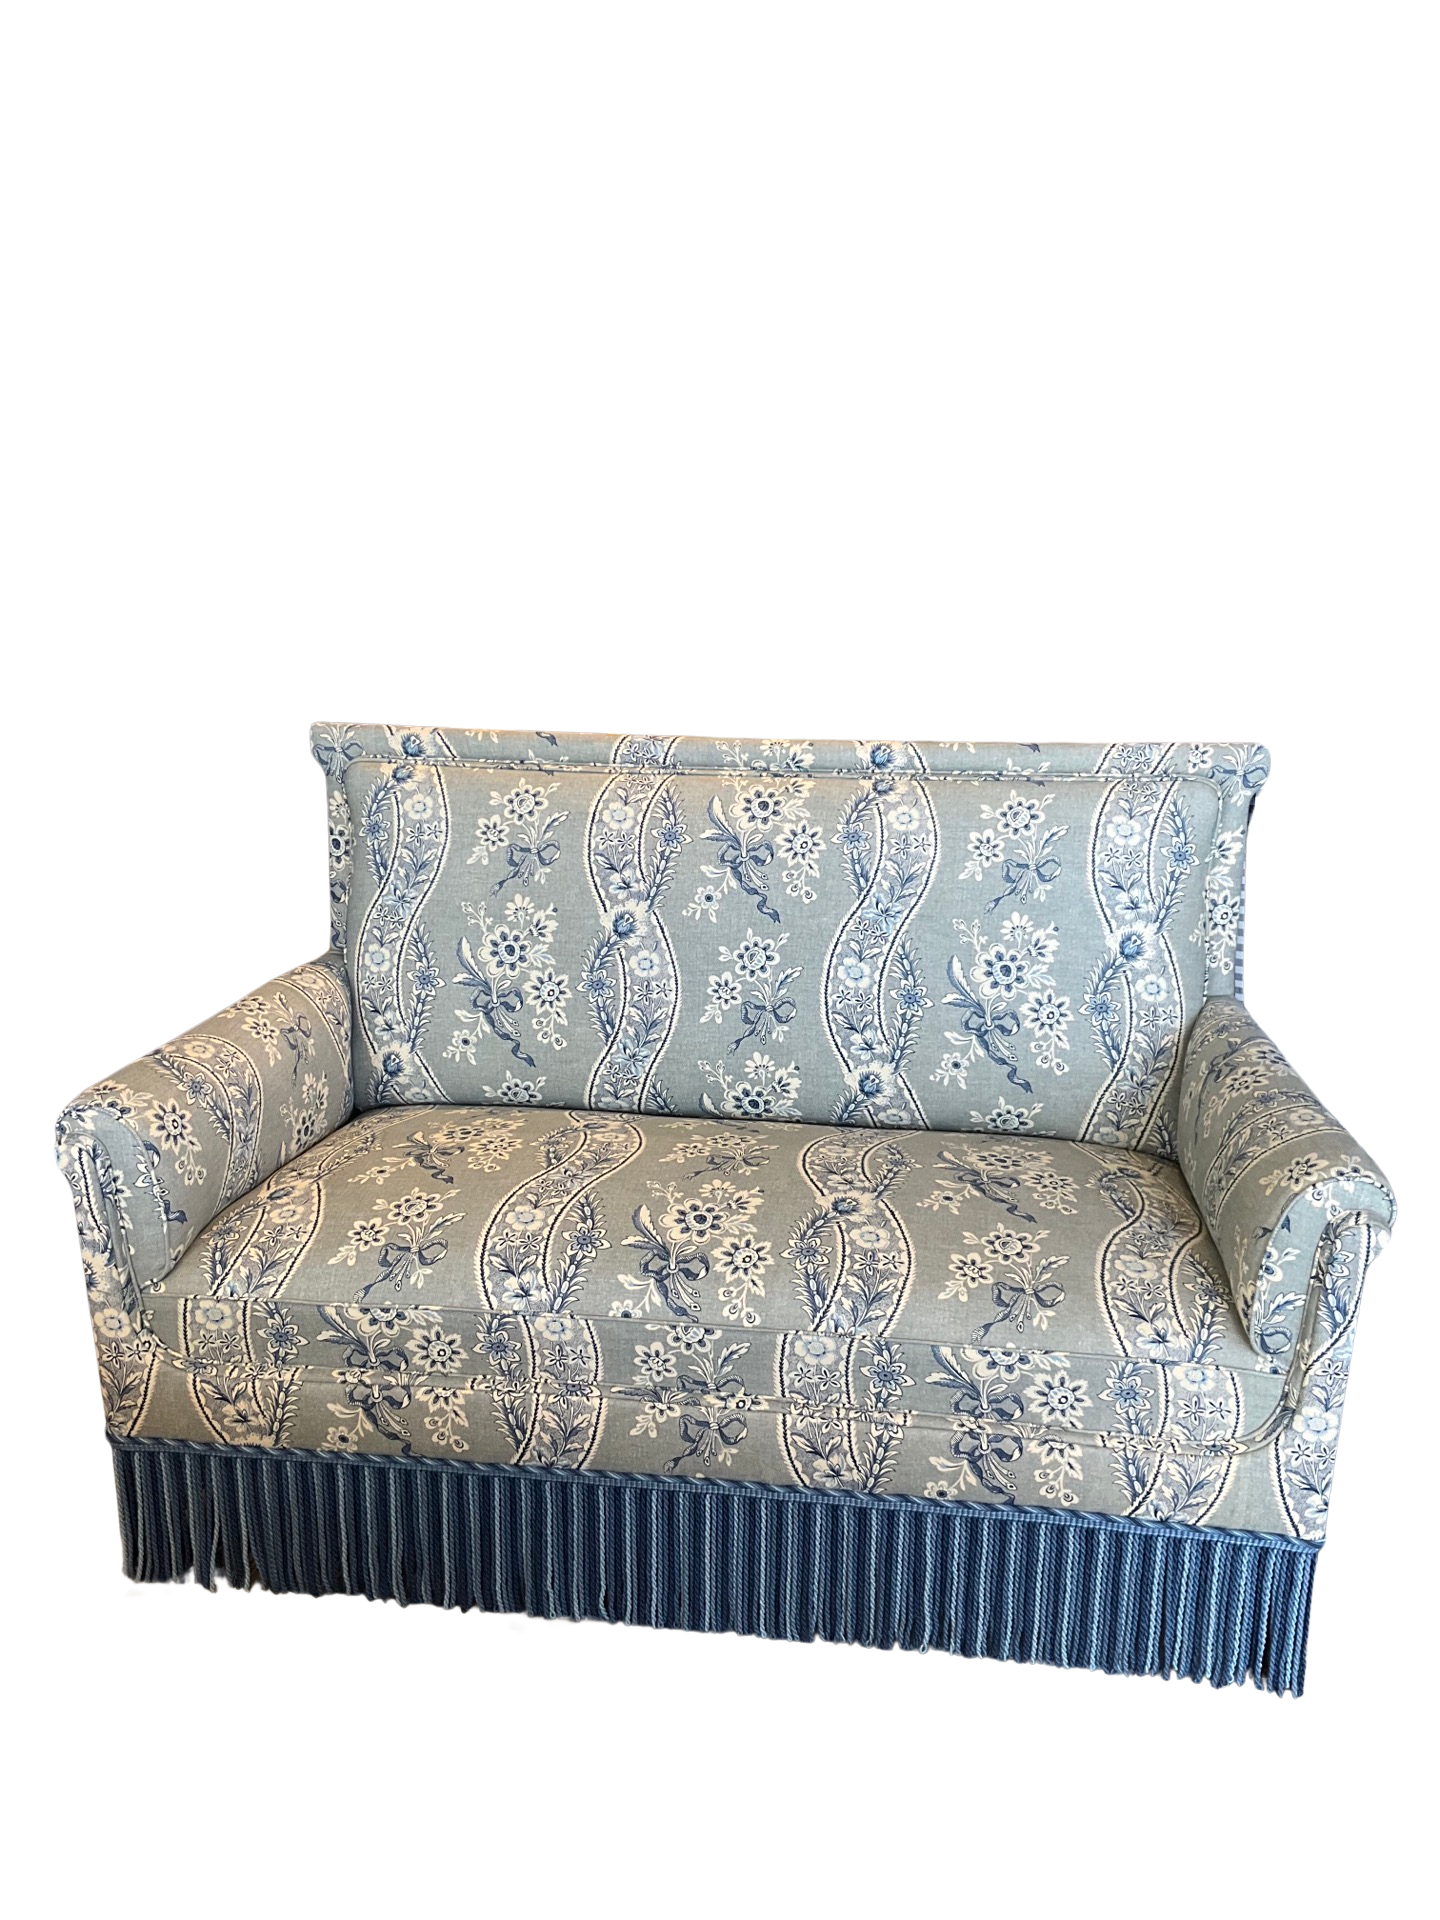 Early 19th Century English Oak Sofa